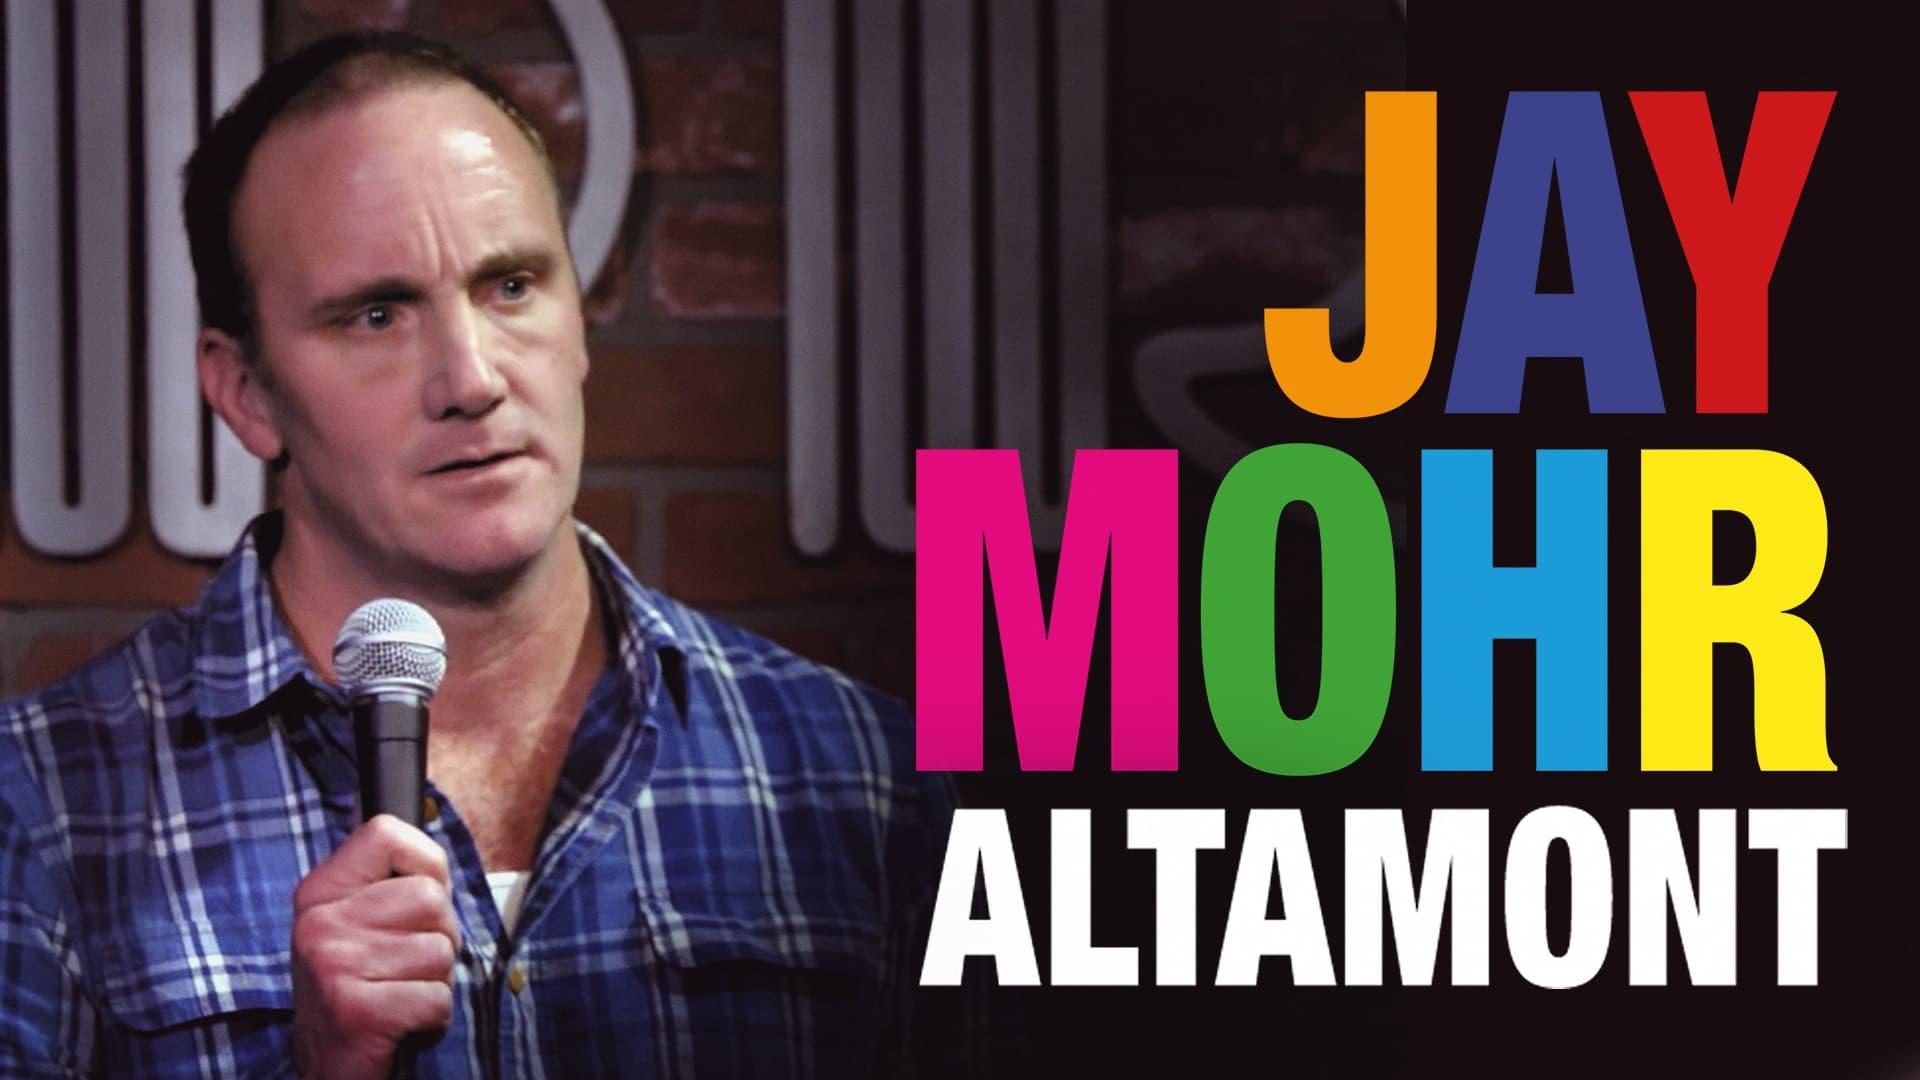 Jay Mohr: Altamont backdrop